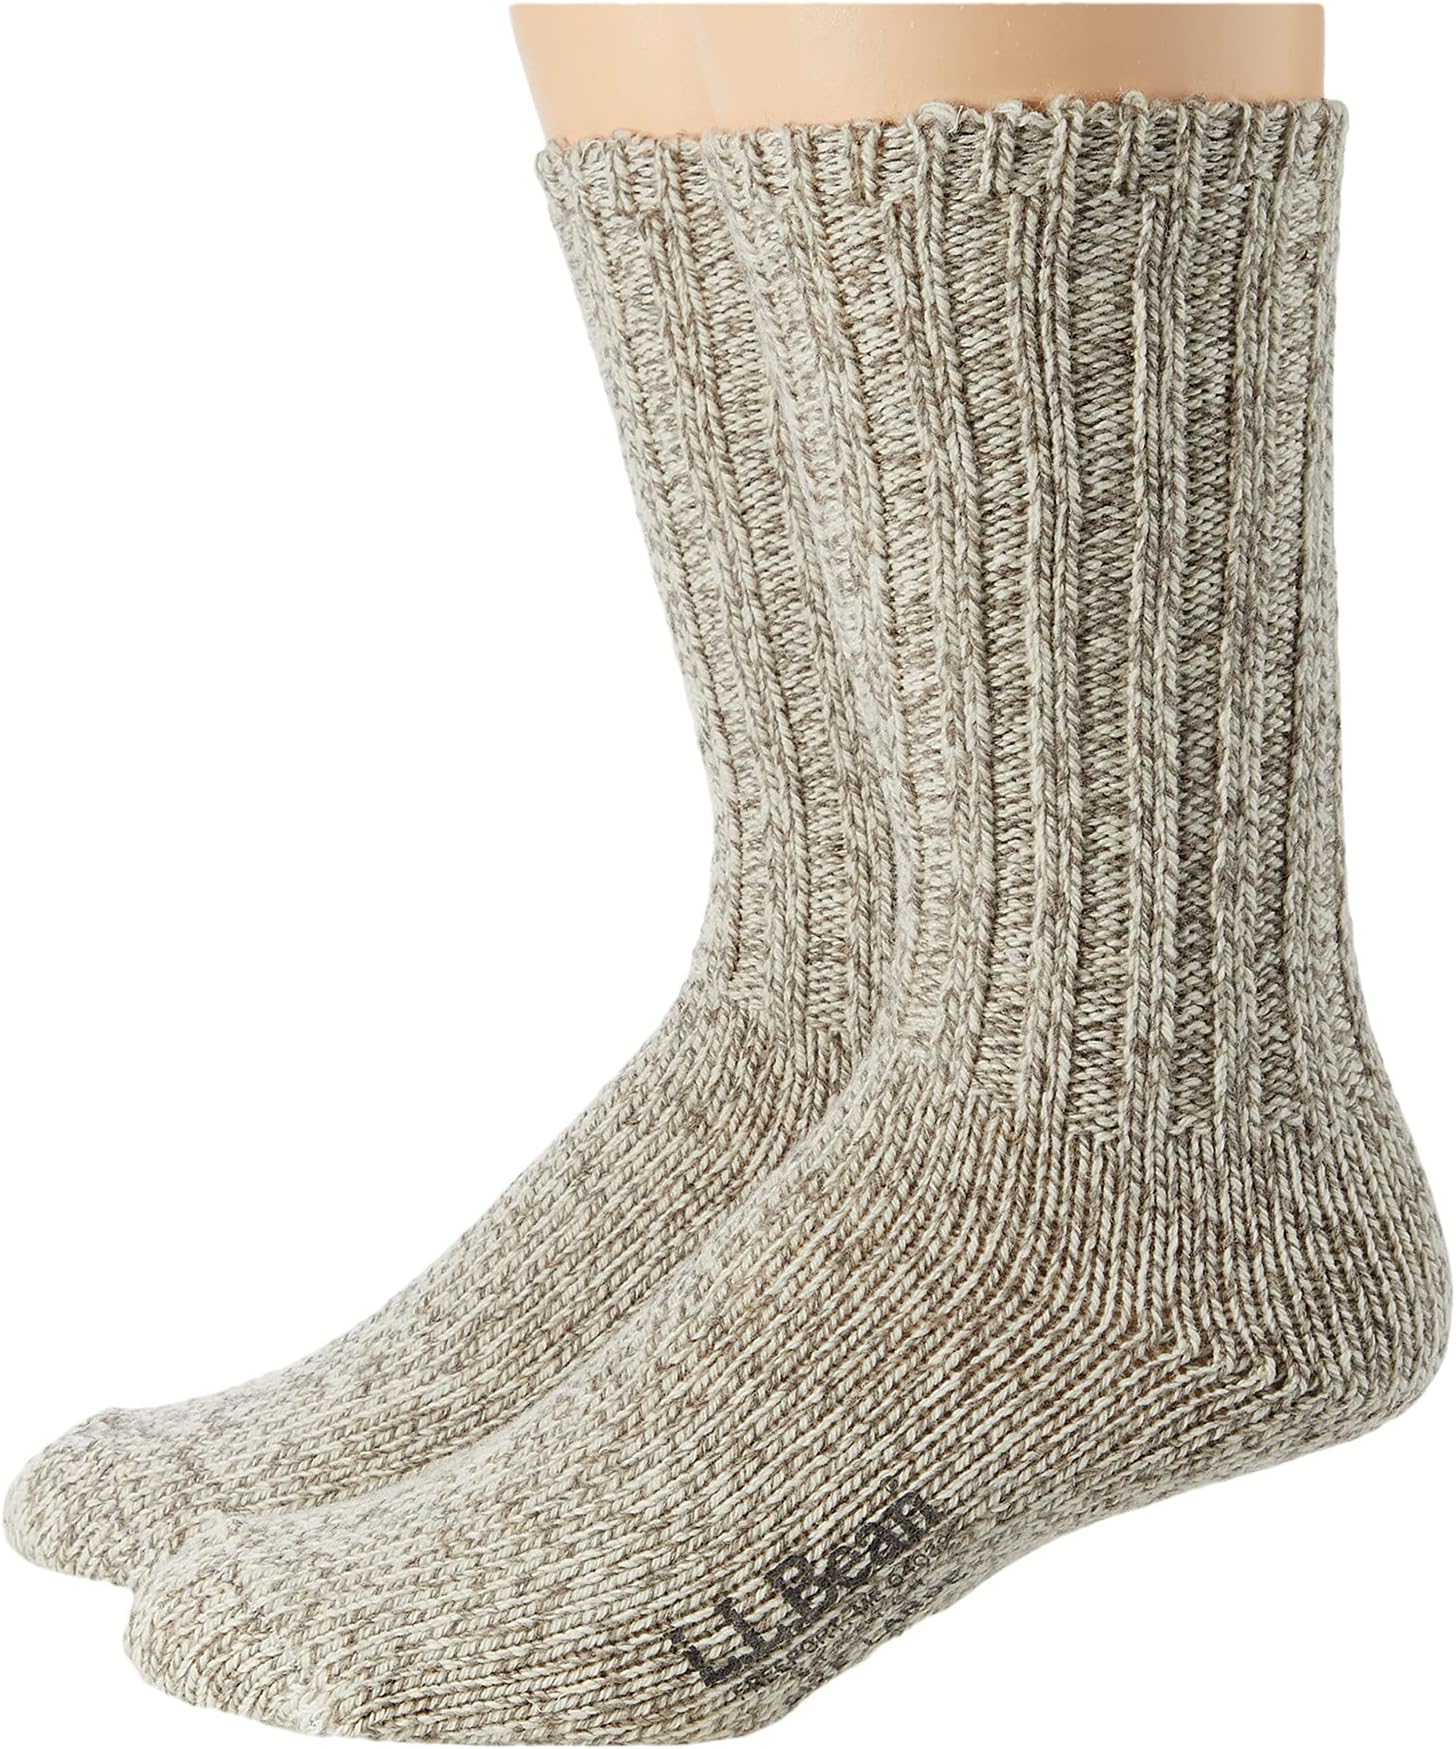 Носки Ragg из мериносовой шерсти, 10 дюймов, 2 пары L.L.Bean, цвет Gray/Gray ковер gera q974b gray gray 1600х2300мм